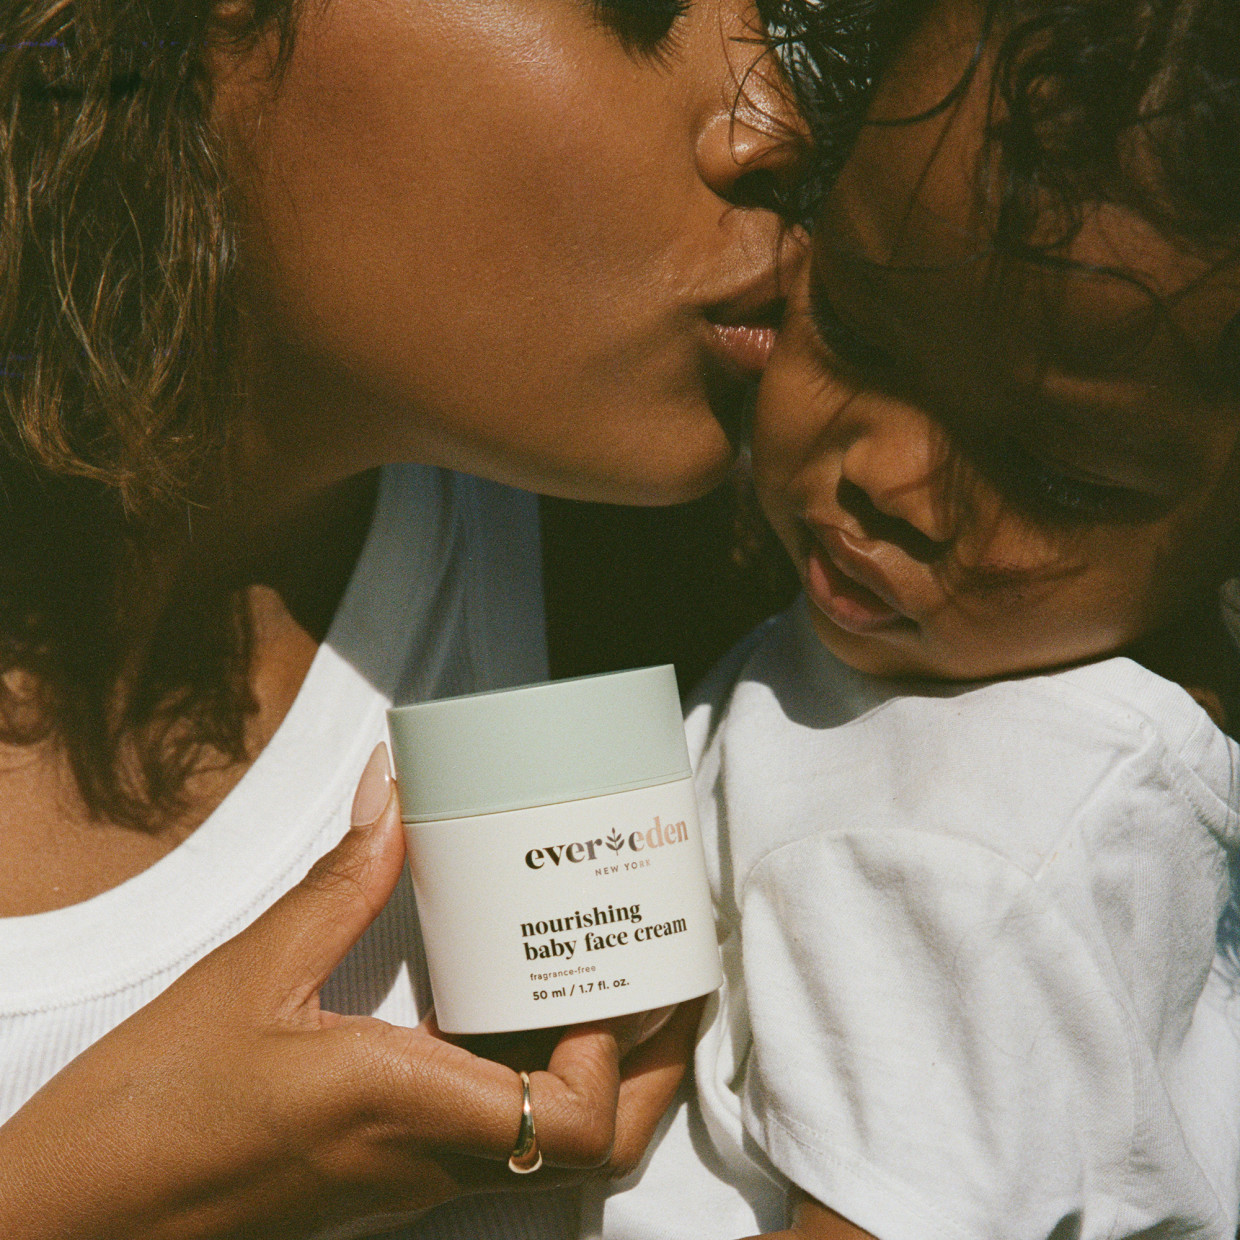 Evereden Nourishing Baby Face Cream - Fragrance Free, 50ml.